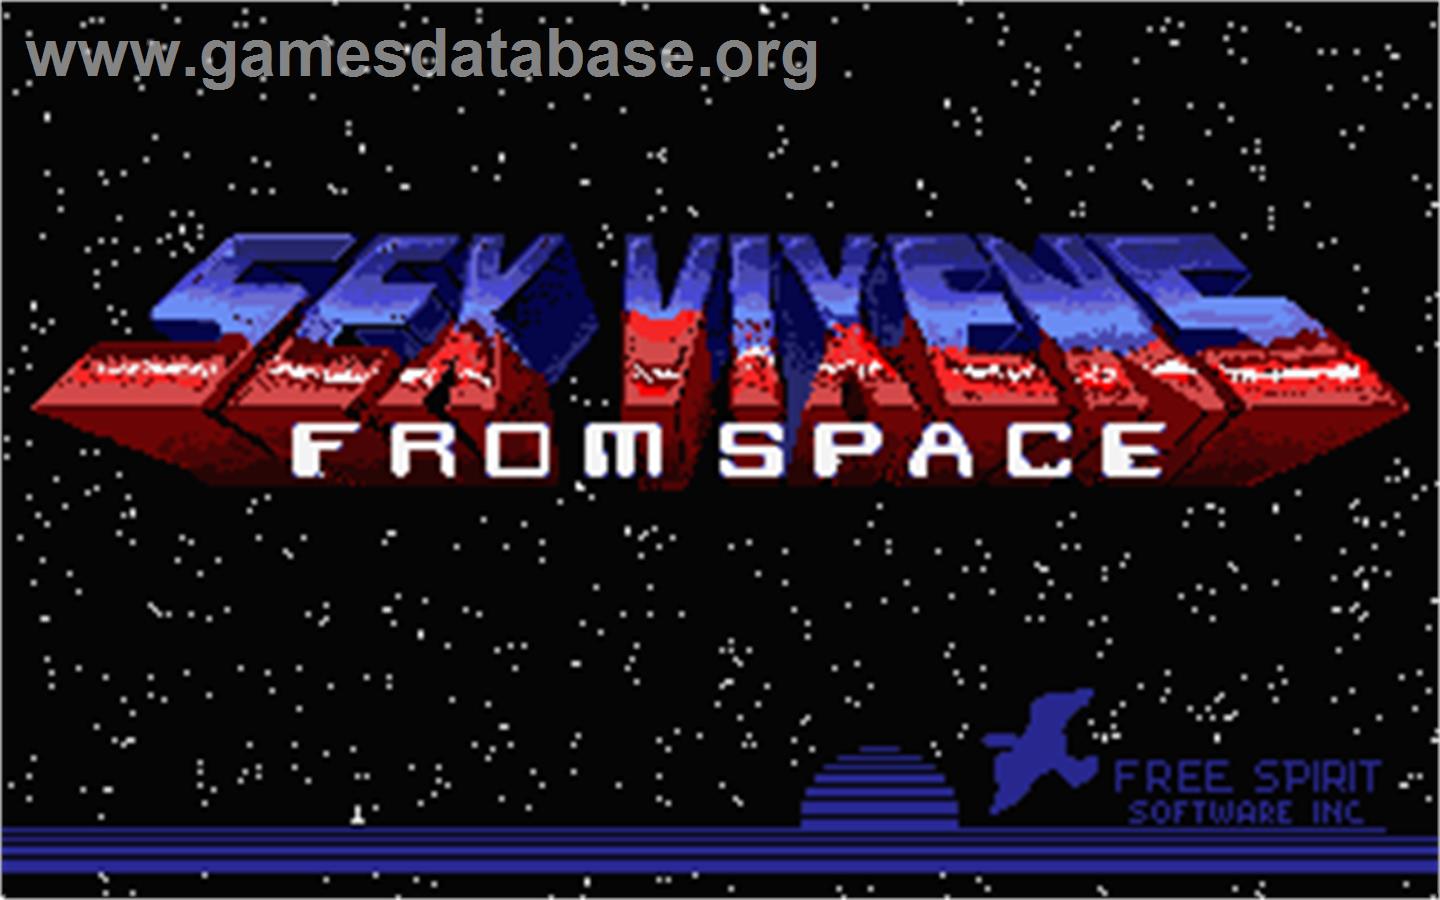 Sex Vixens from Space - Atari ST - Artwork - Title Screen